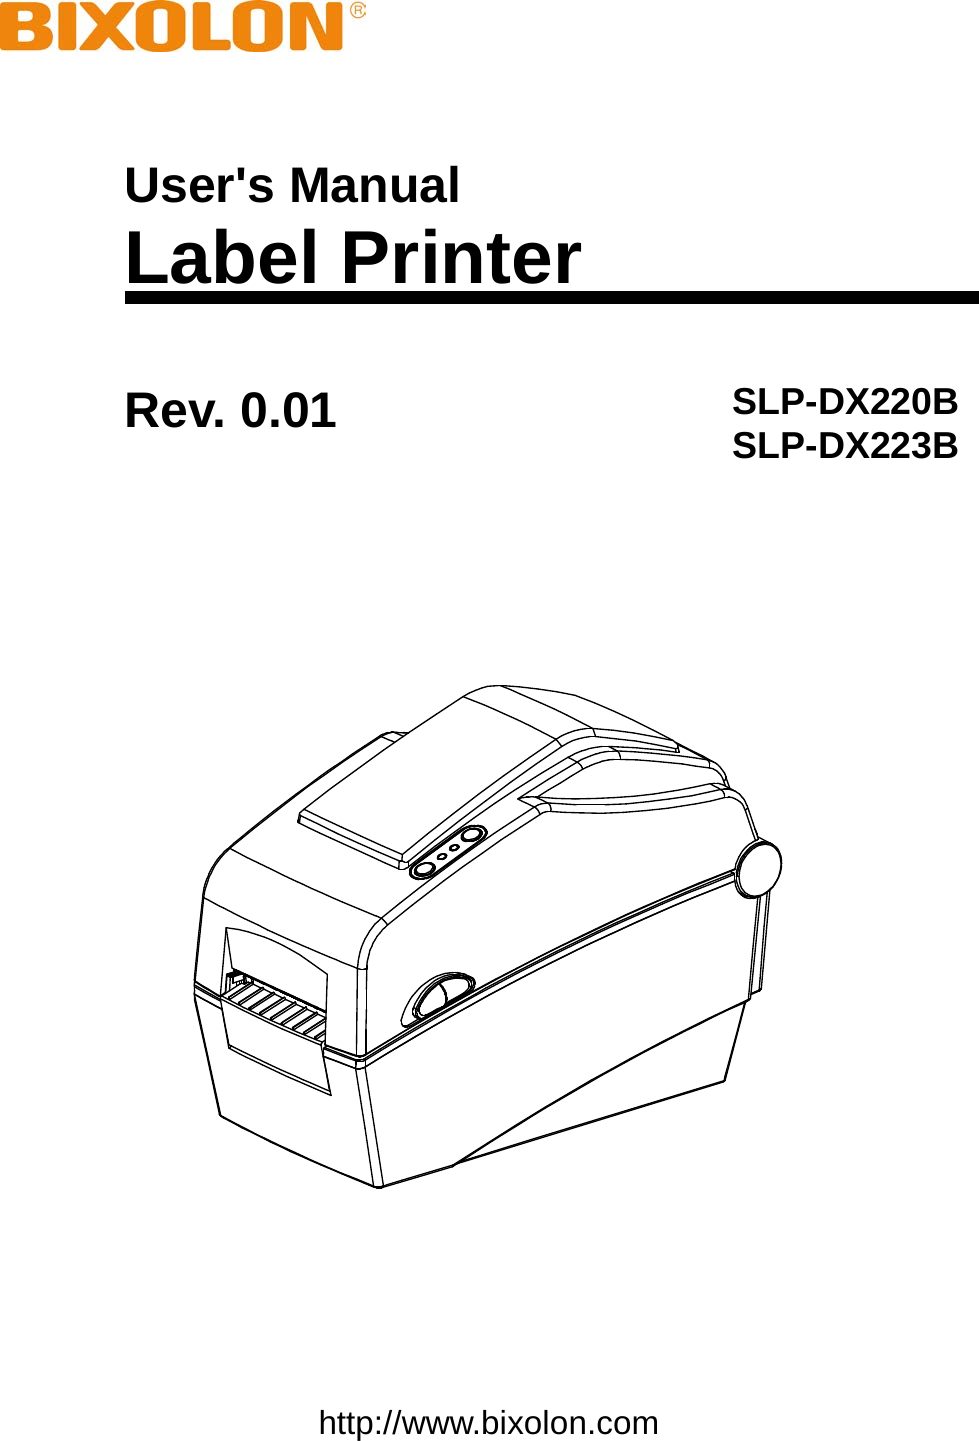      User&apos;s Manual Label Printer Rev. 0.01 SLP-DX220B SLP-DX223B      http://www.bixolon.com  